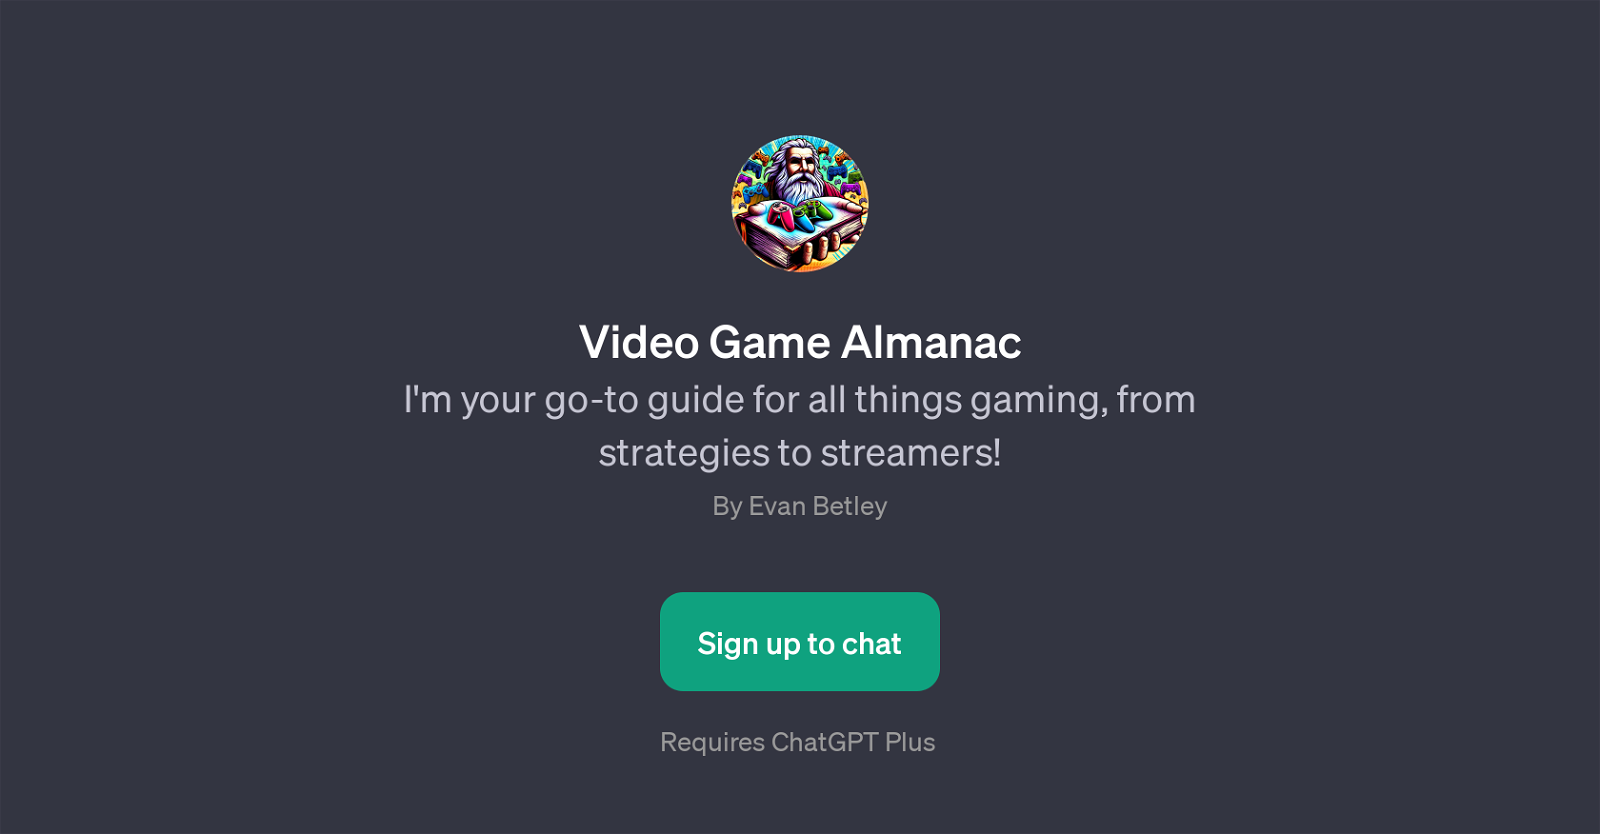 Video Game Almanac website